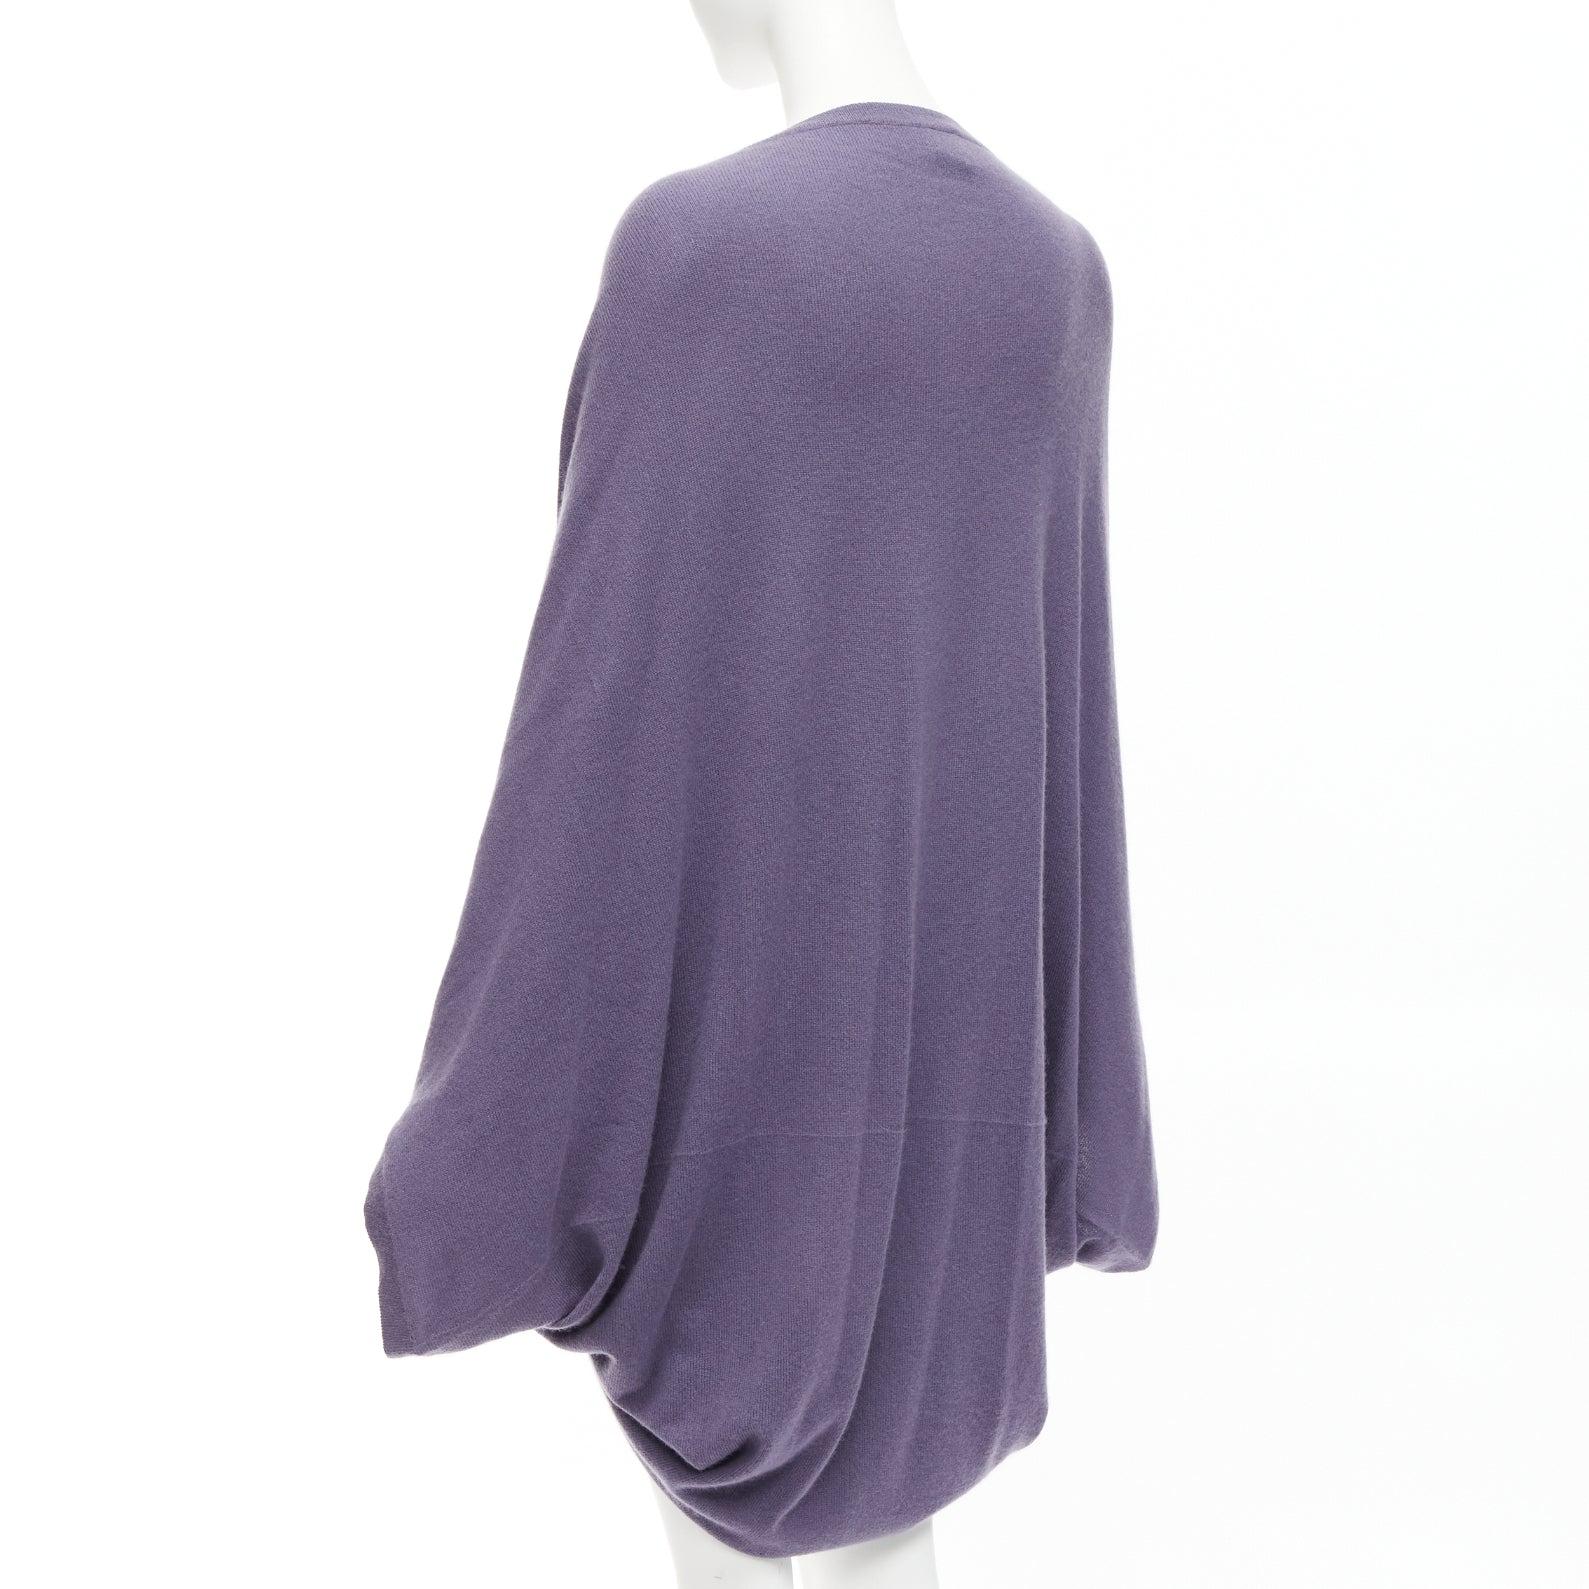 TSE 100% pure cashmere purple low cut batwing shawl cardigan For Sale 1